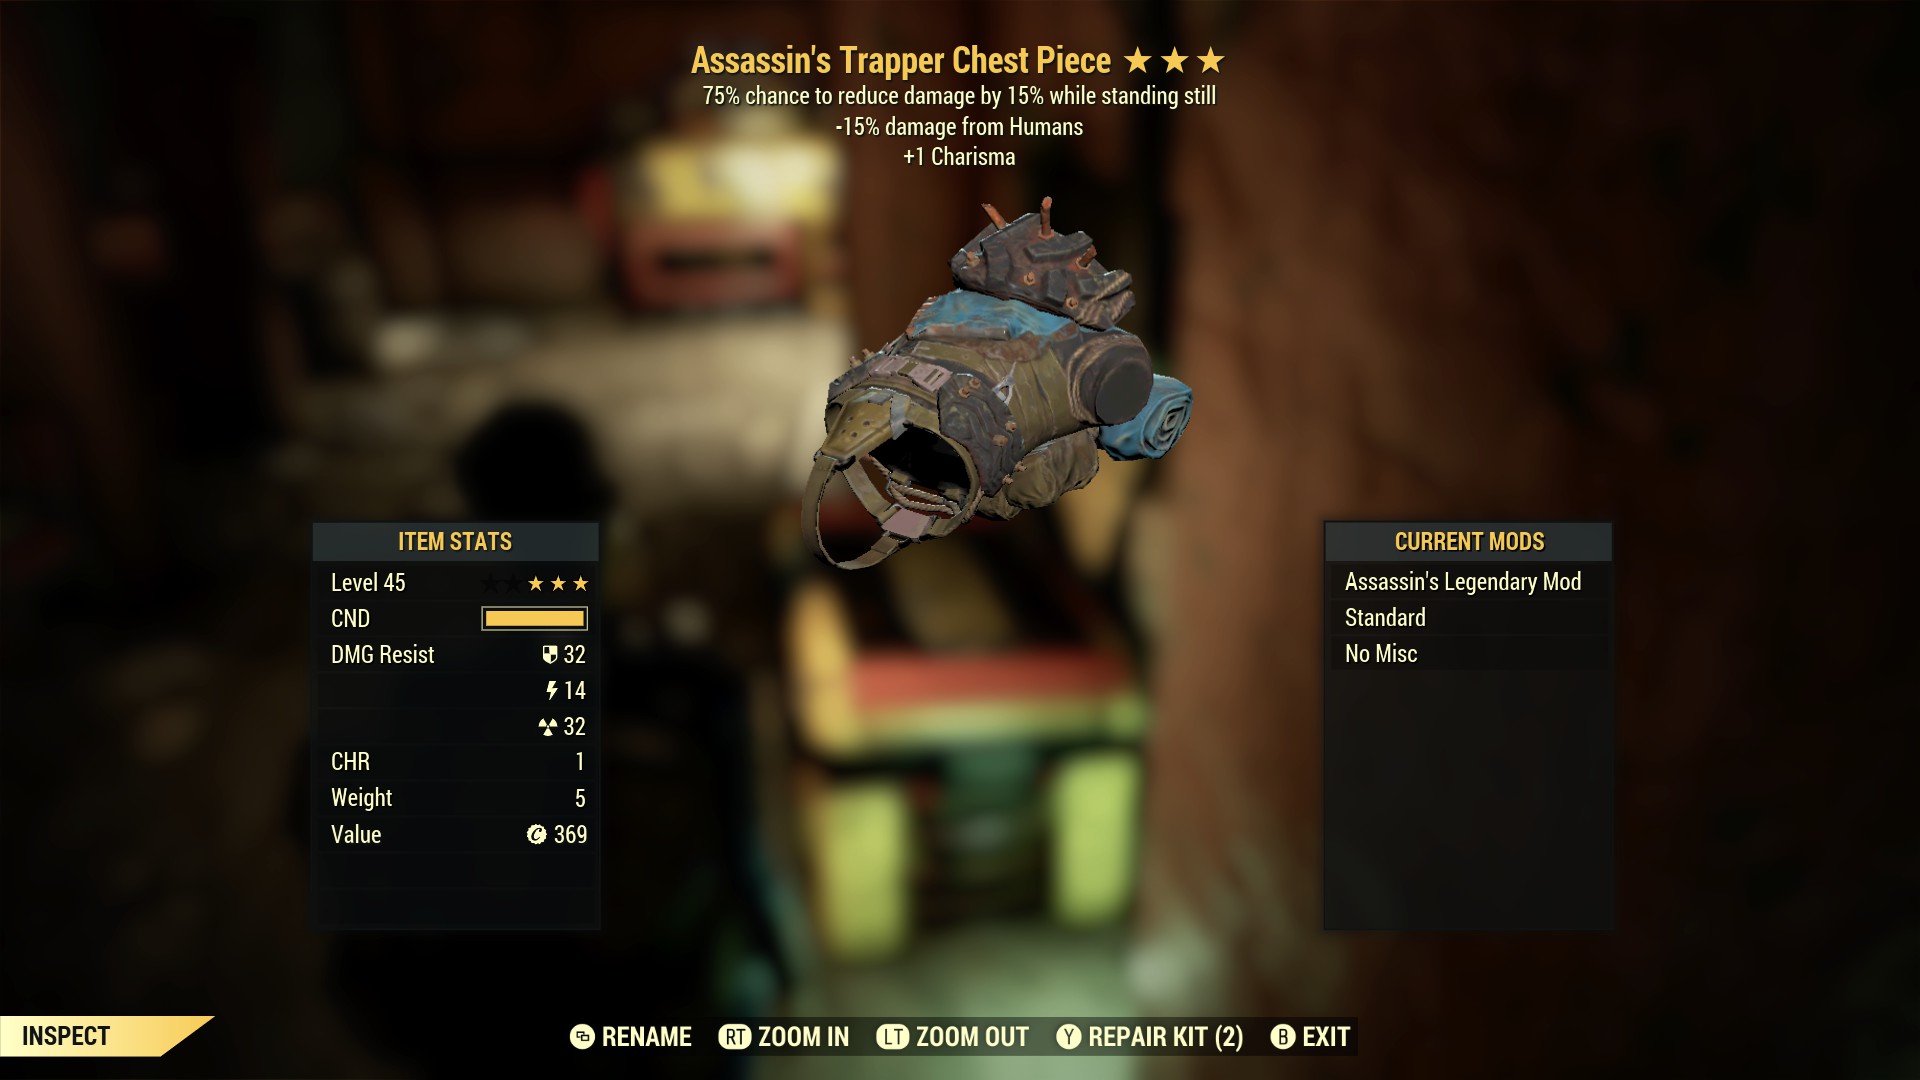 Assassin's Trapper Chest Piece